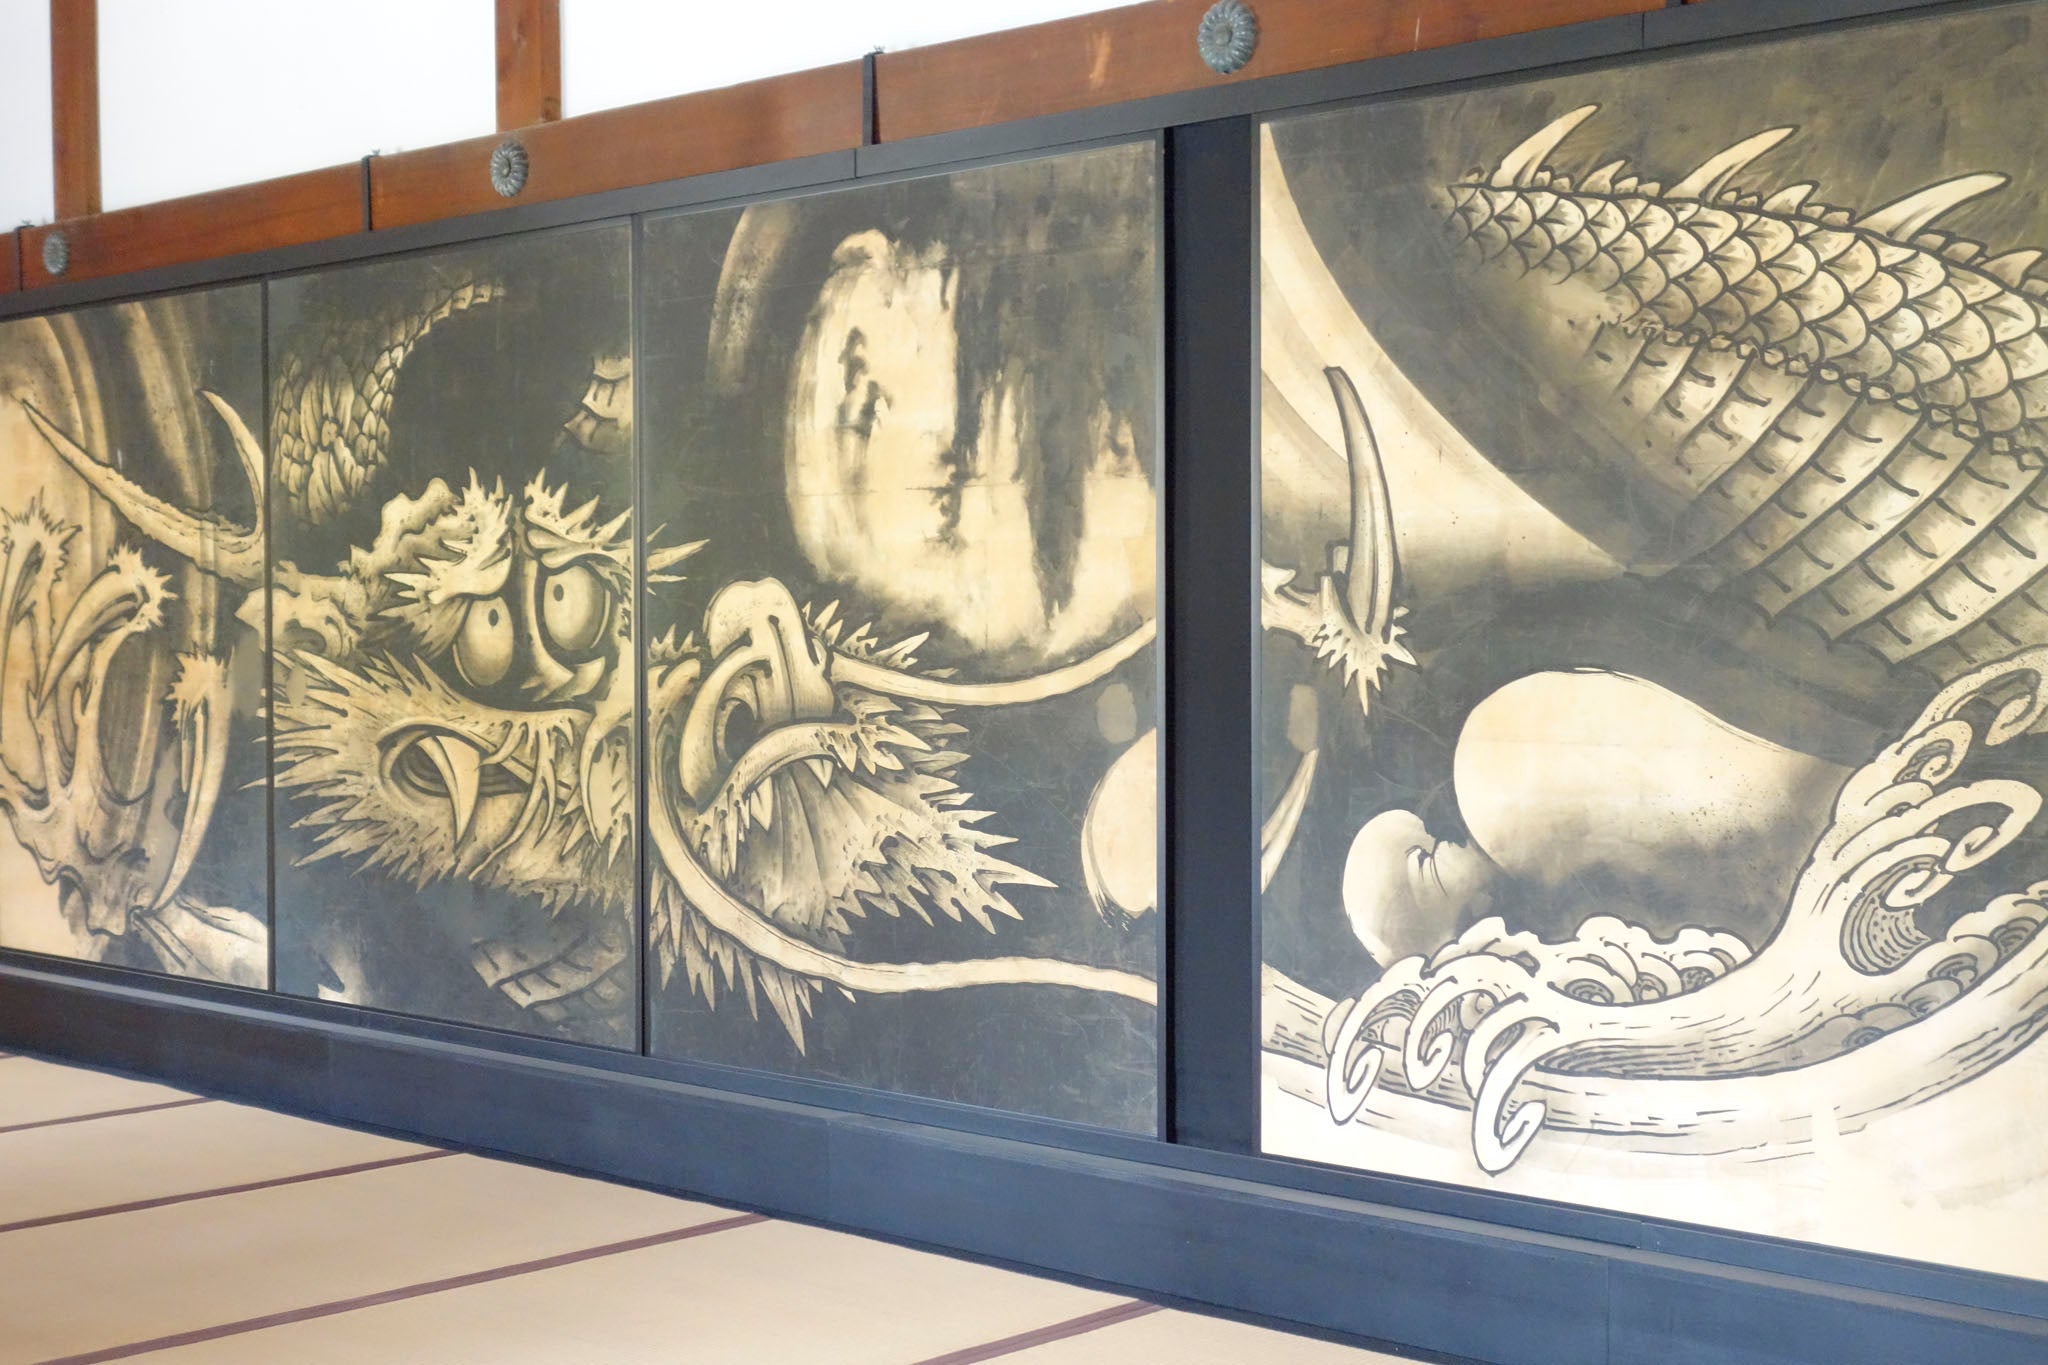 Unryuzu Cloud Dragon painted on fusuma doors of the Tenryu-Ji Buddhist Temple of Arashiyama, Japan